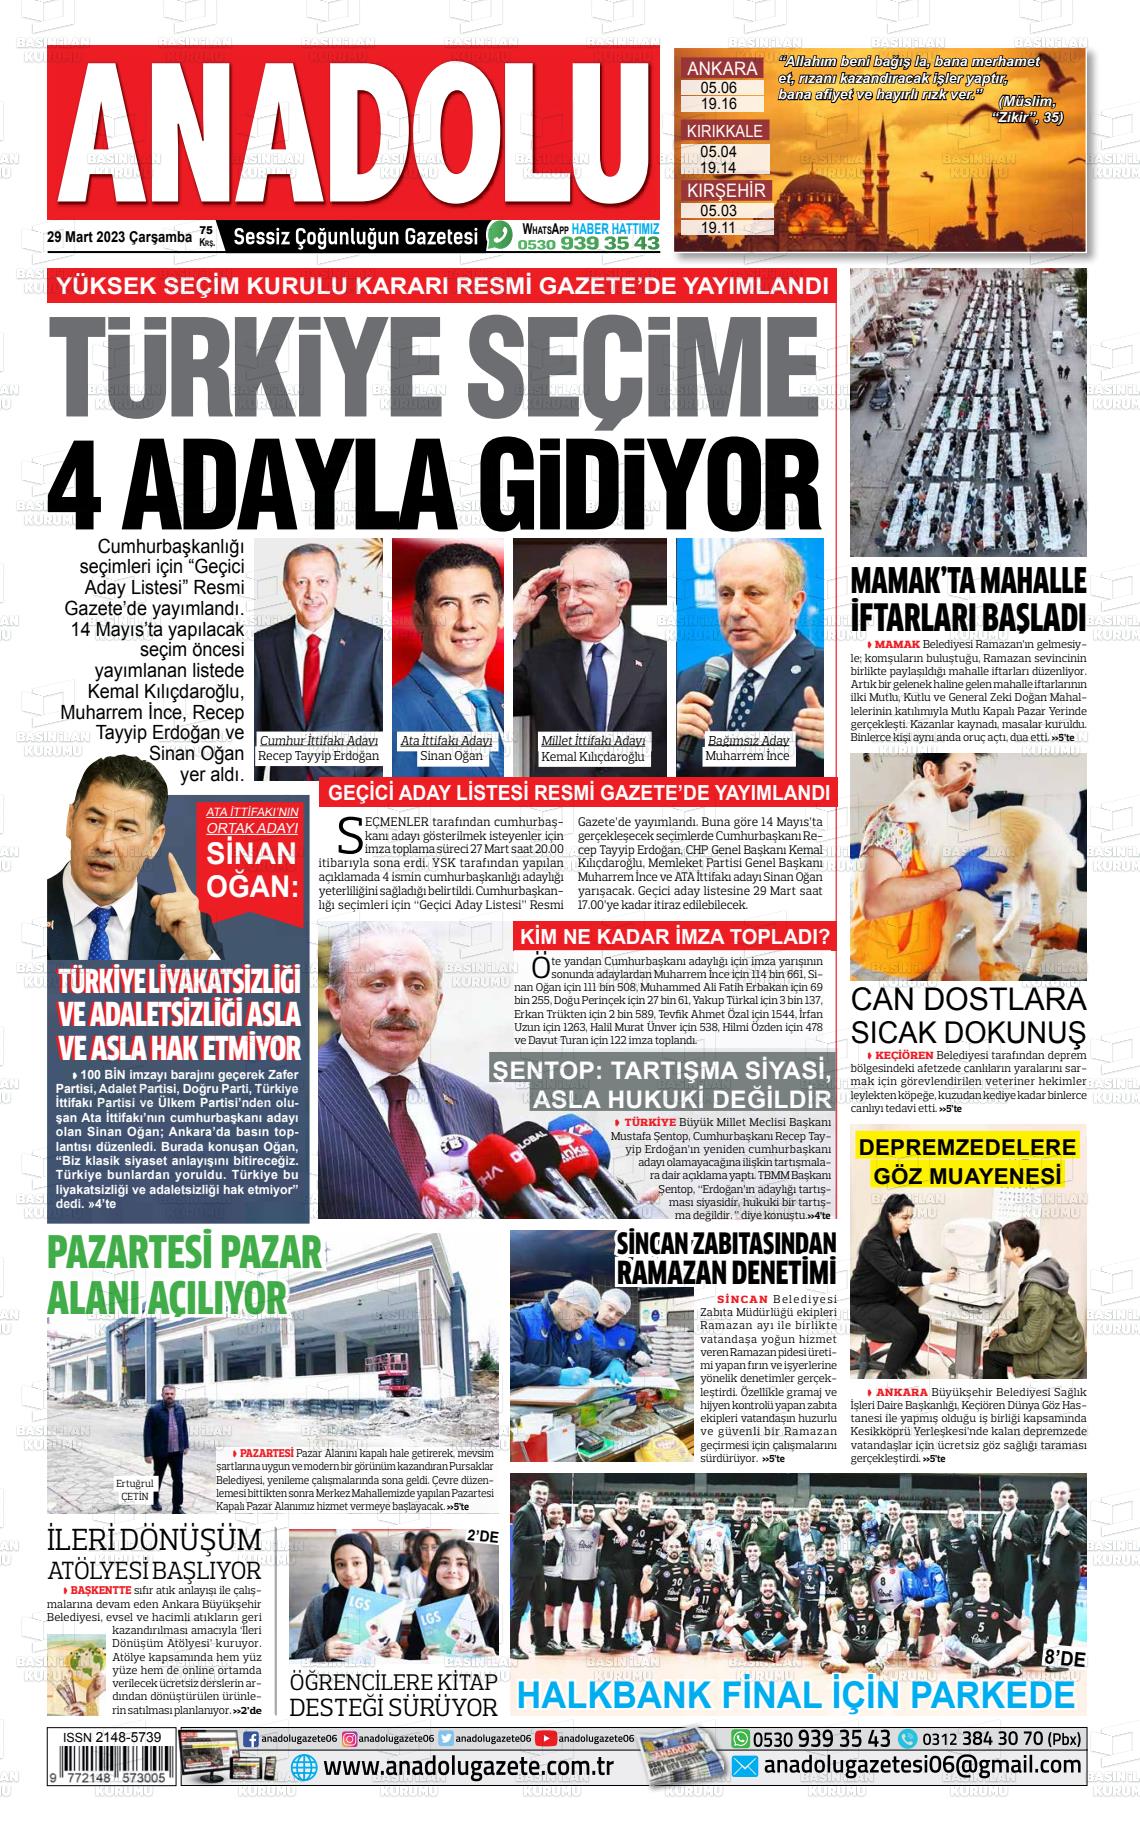 29 Mart 2023 Ankara Anadolu Gazete Manşeti